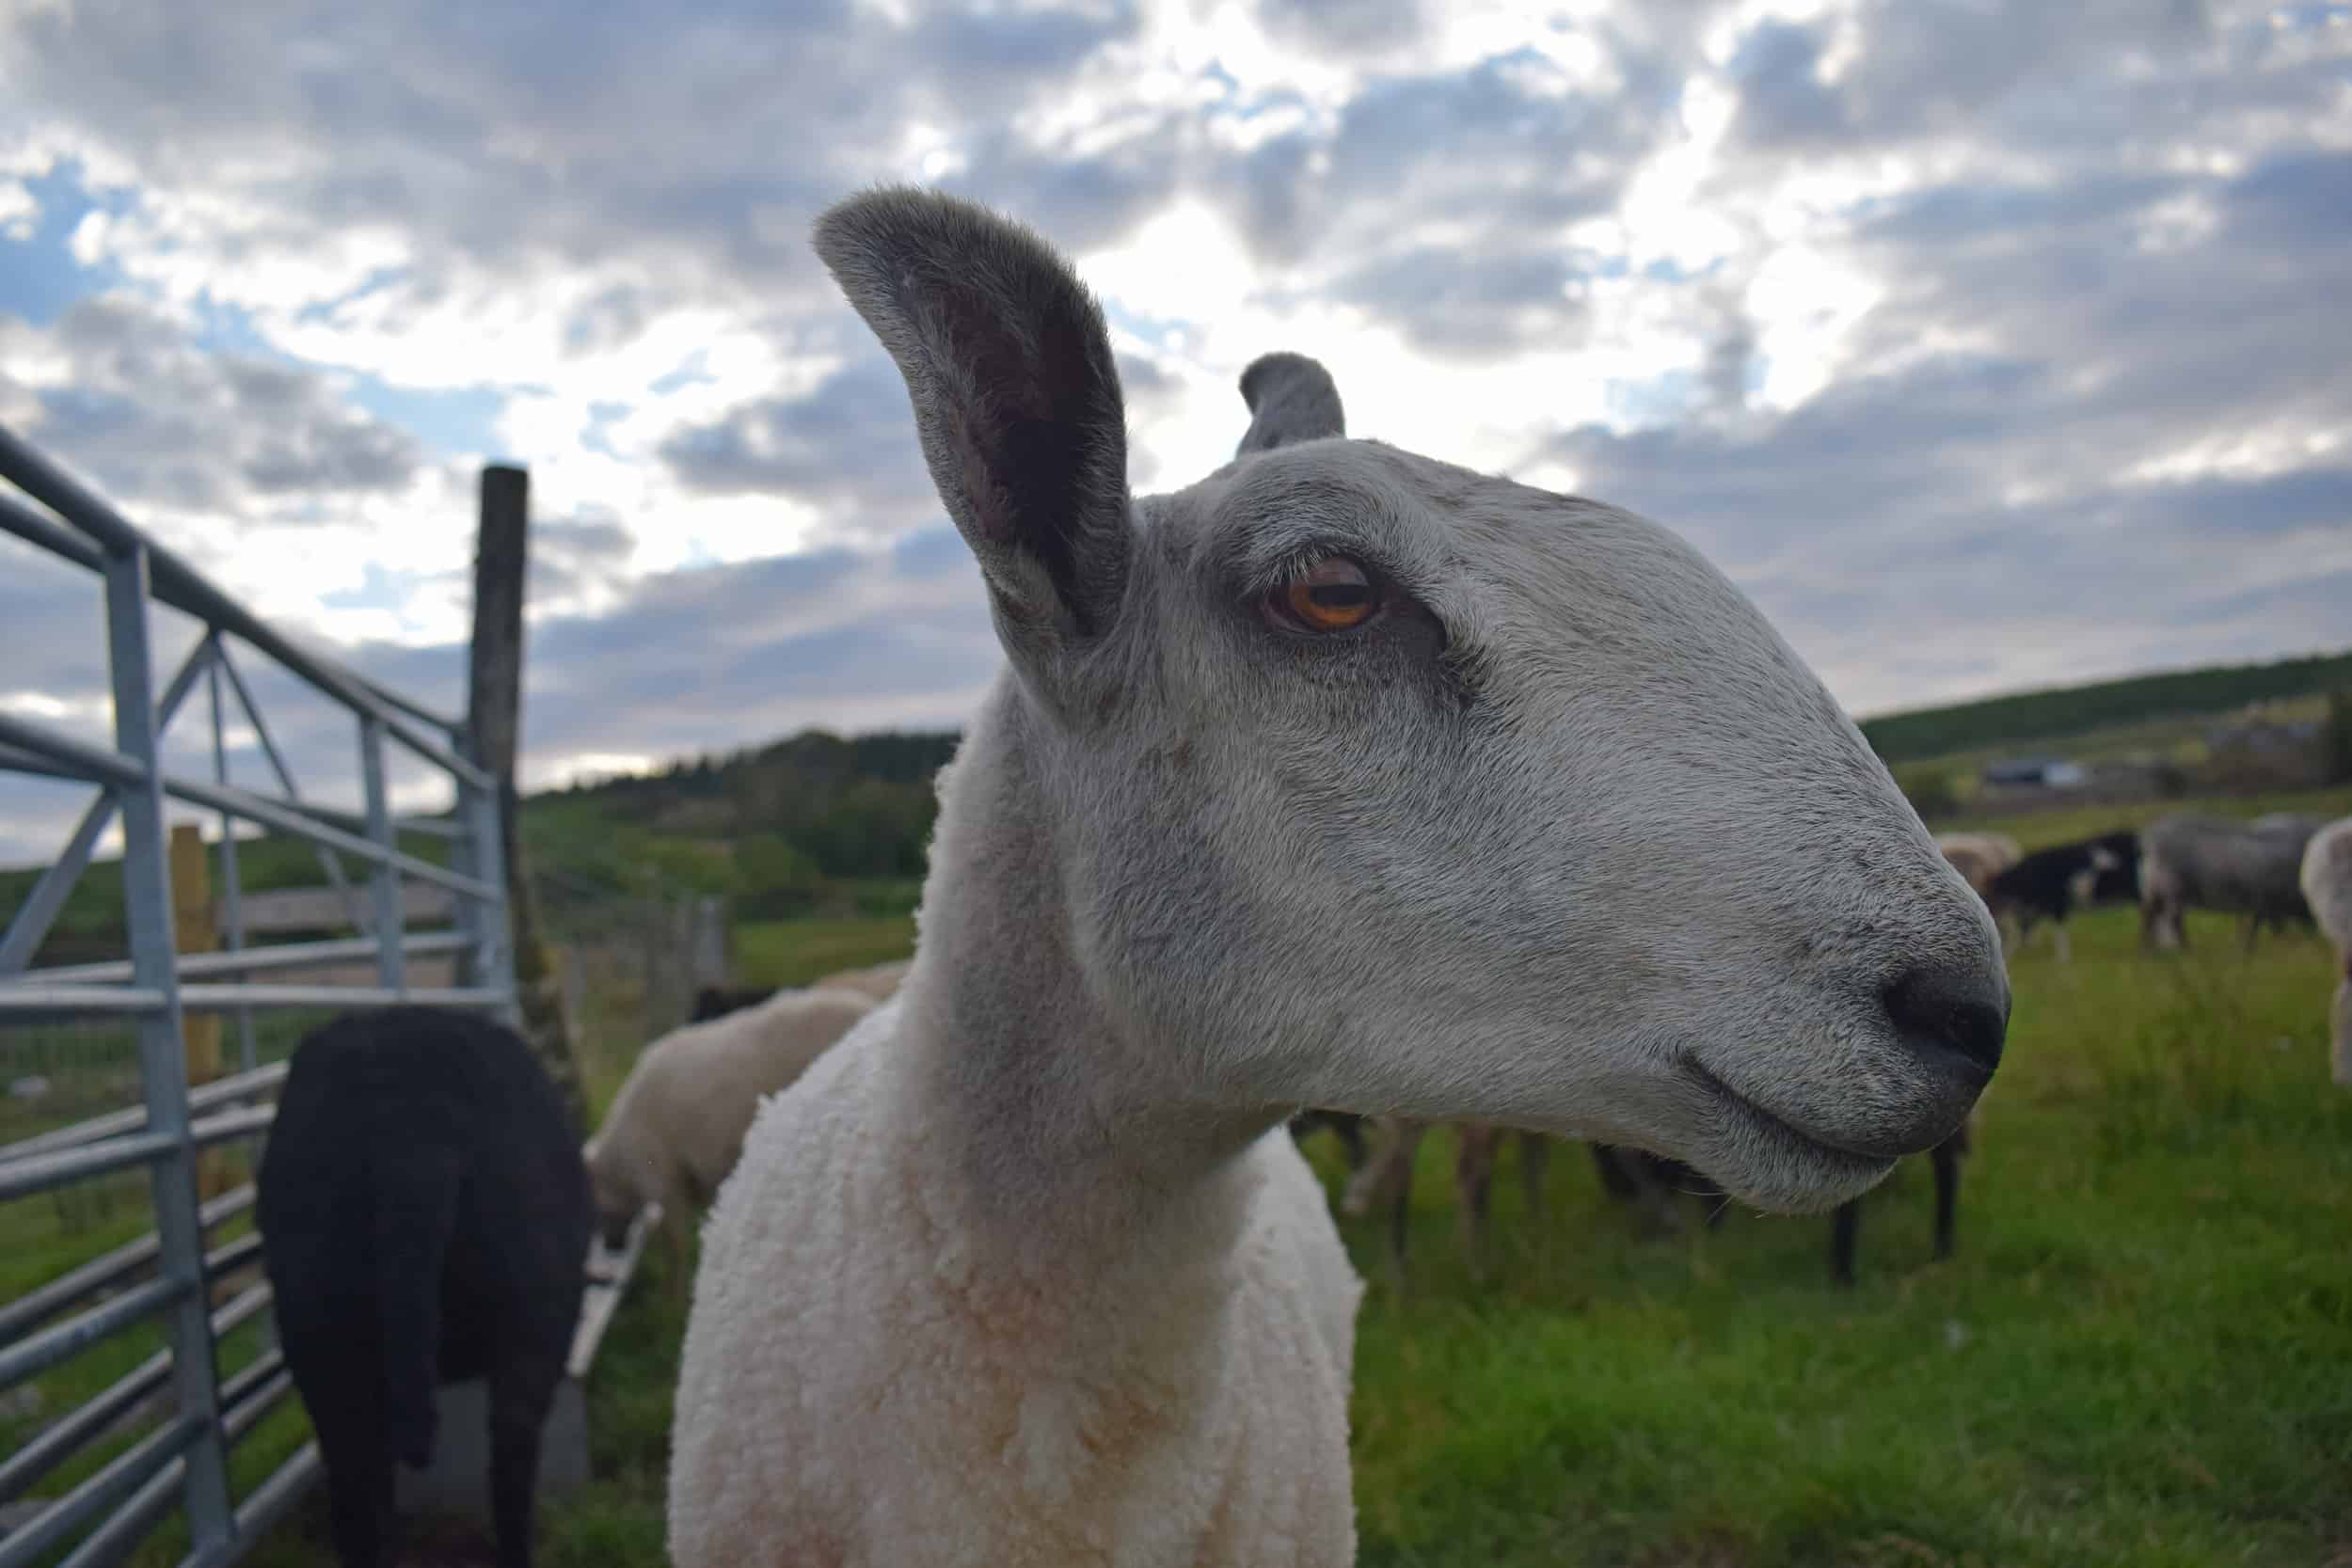 Lily bfl blueface leicester sheep ewe lamb pet bottle yearling shearling roman nose